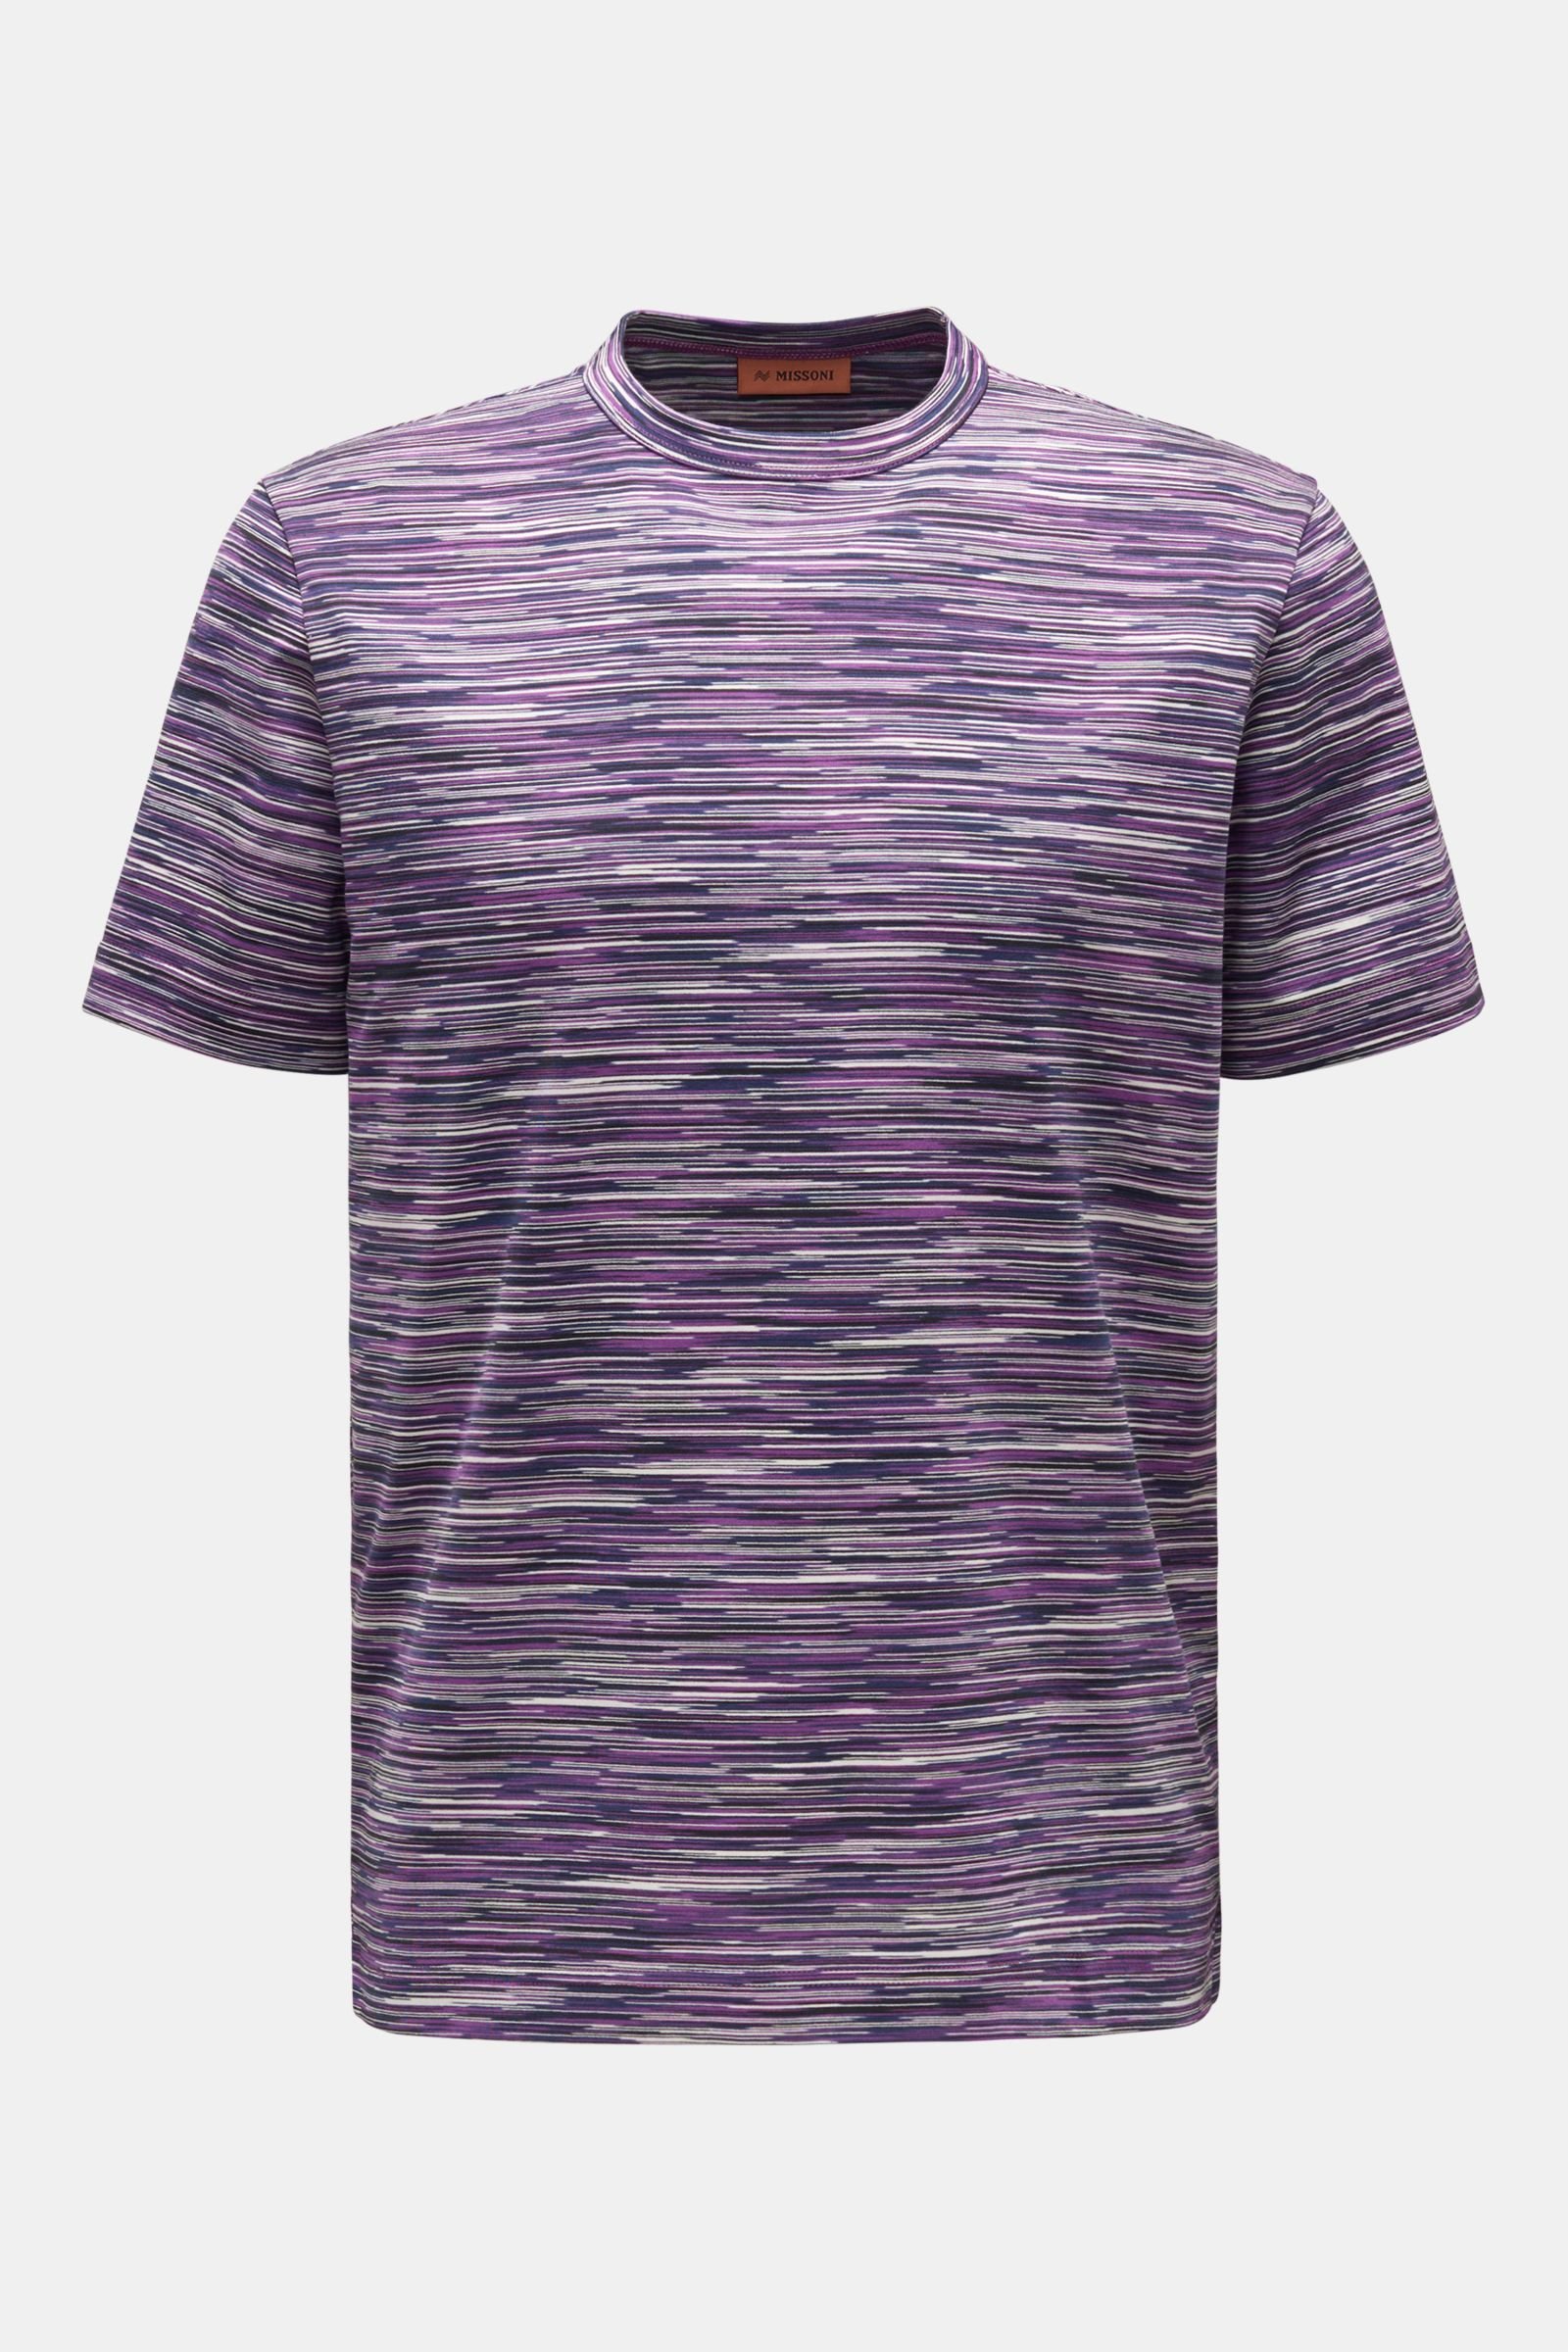 Crew neck T-shirt purple/navy/white striped